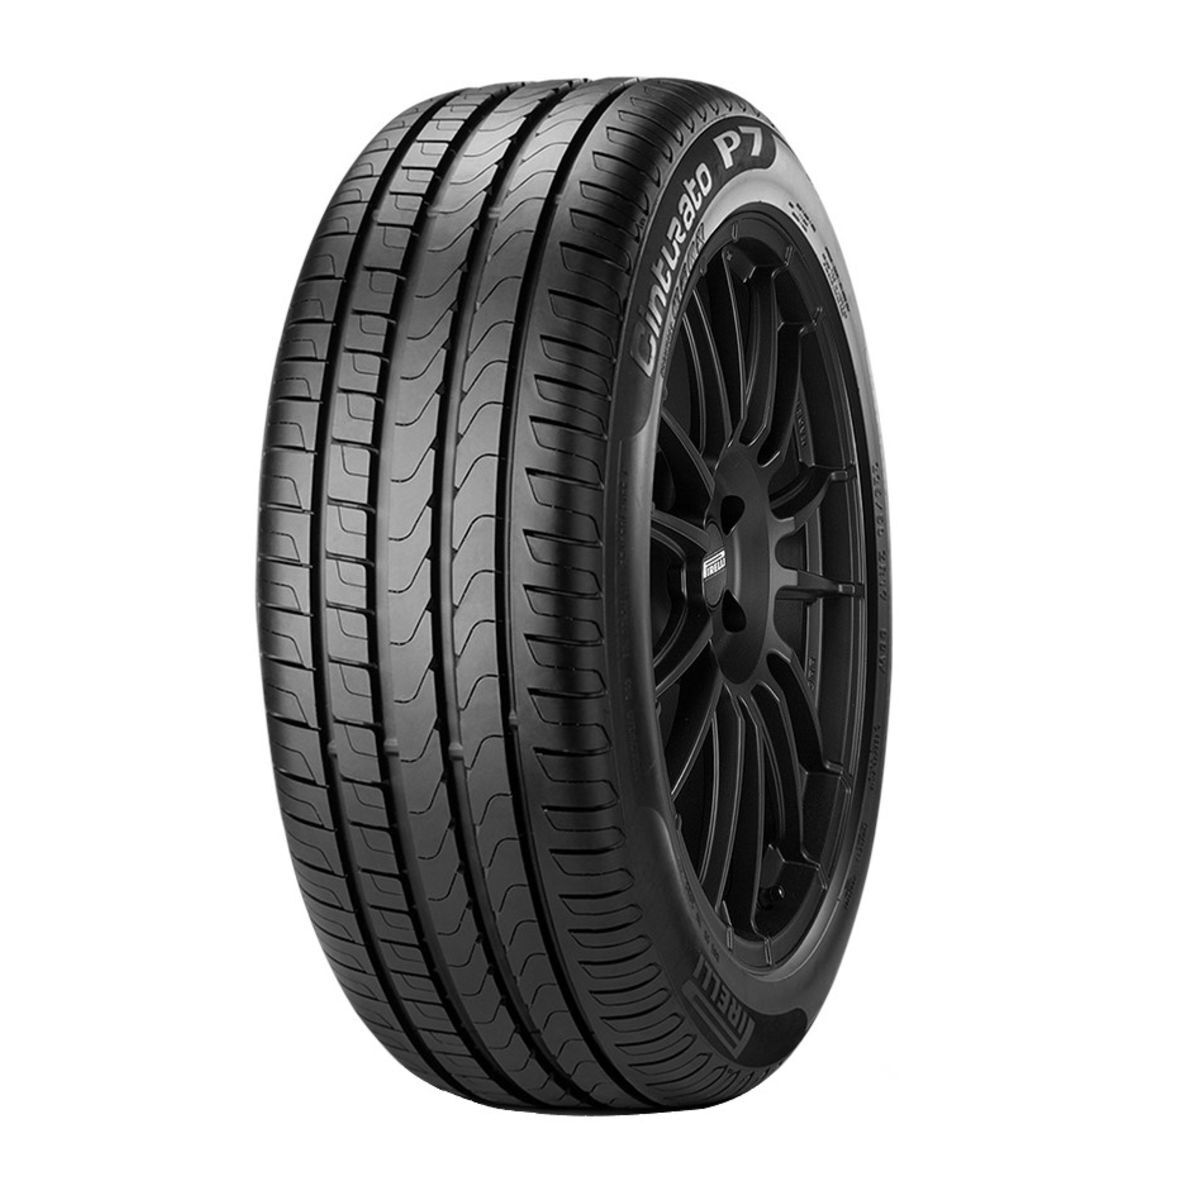 Neumáticos de verano PIRELLI Cinturato P7 205/55R17 91W